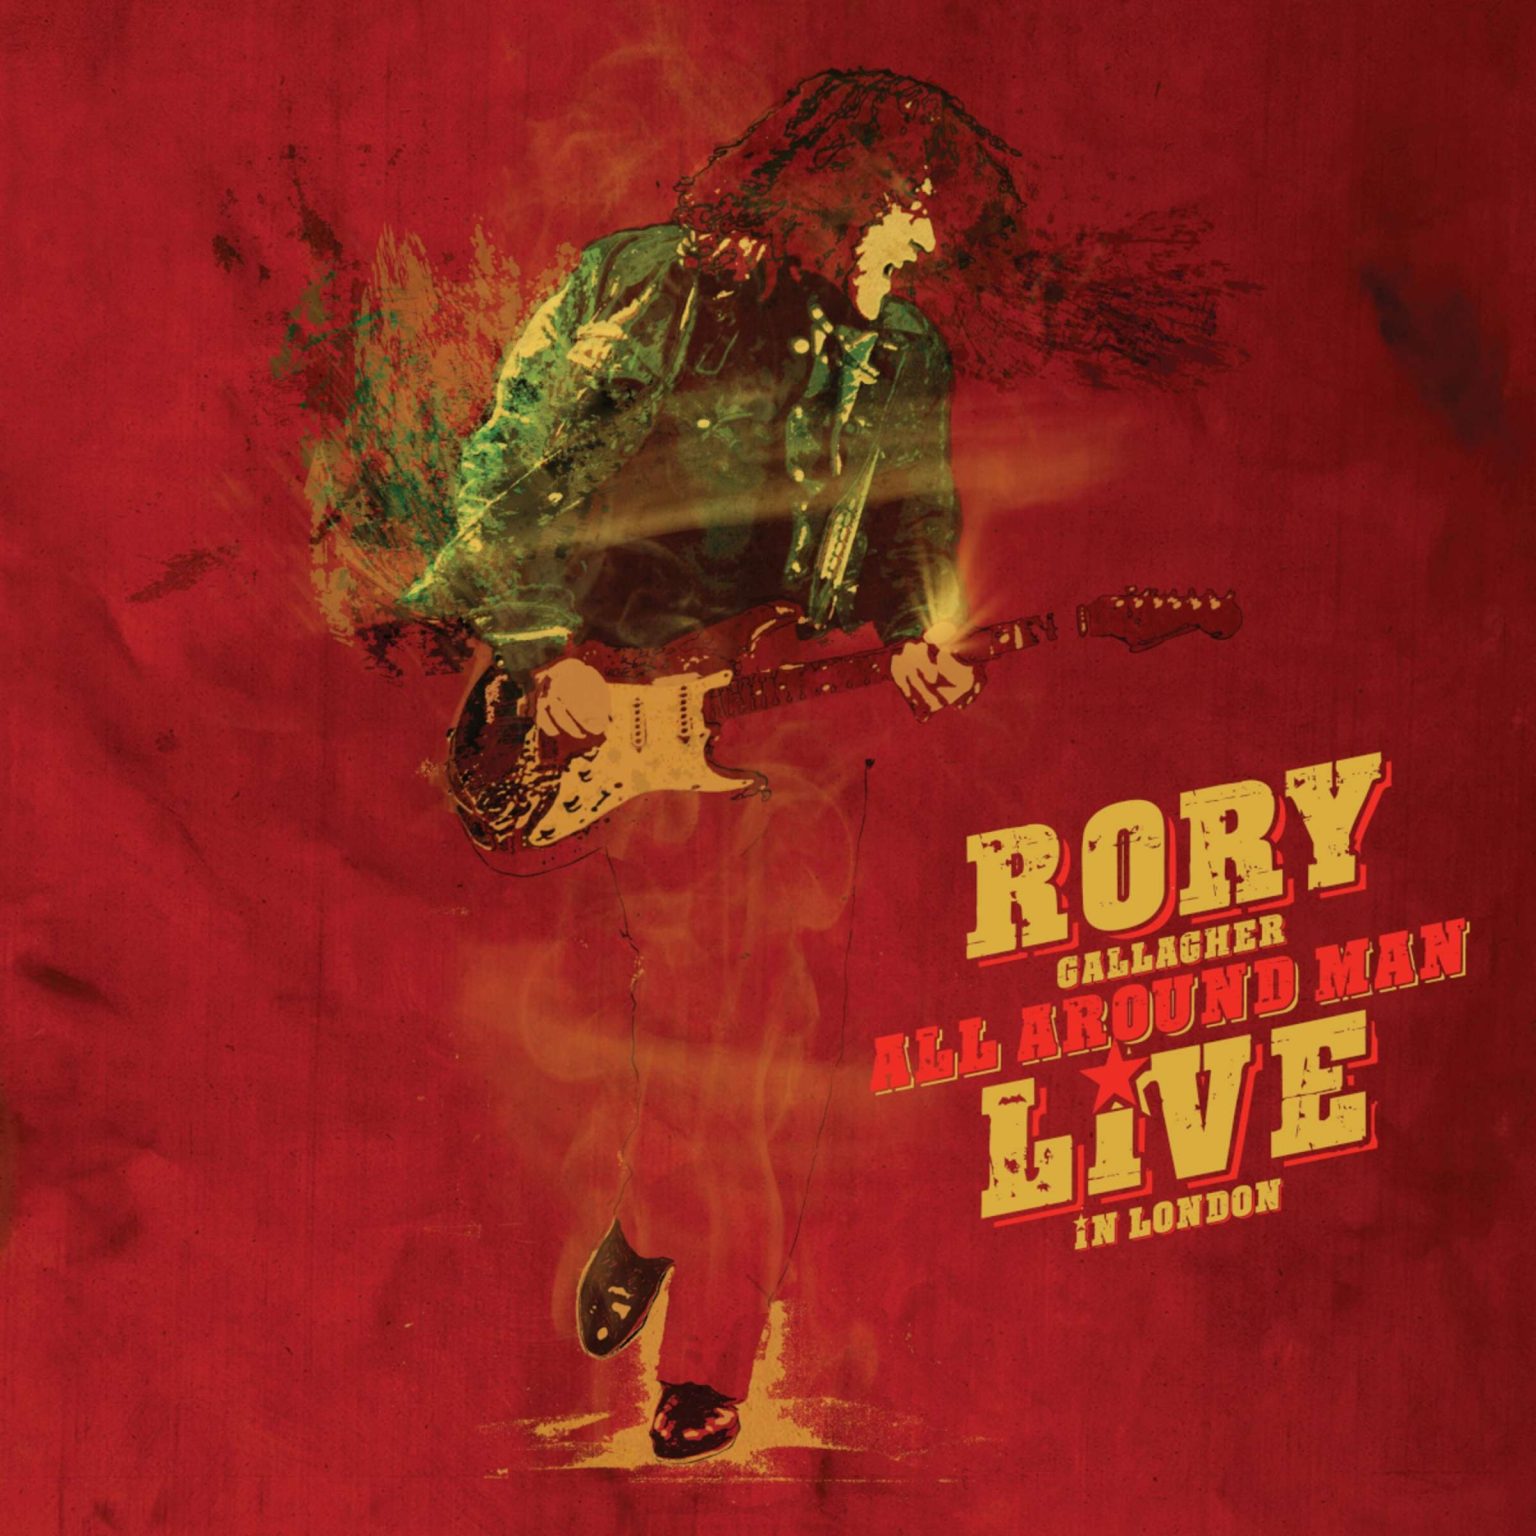 Okładka płyty CD artysty Rory Gallagher o tytule All Around Man - Live in London